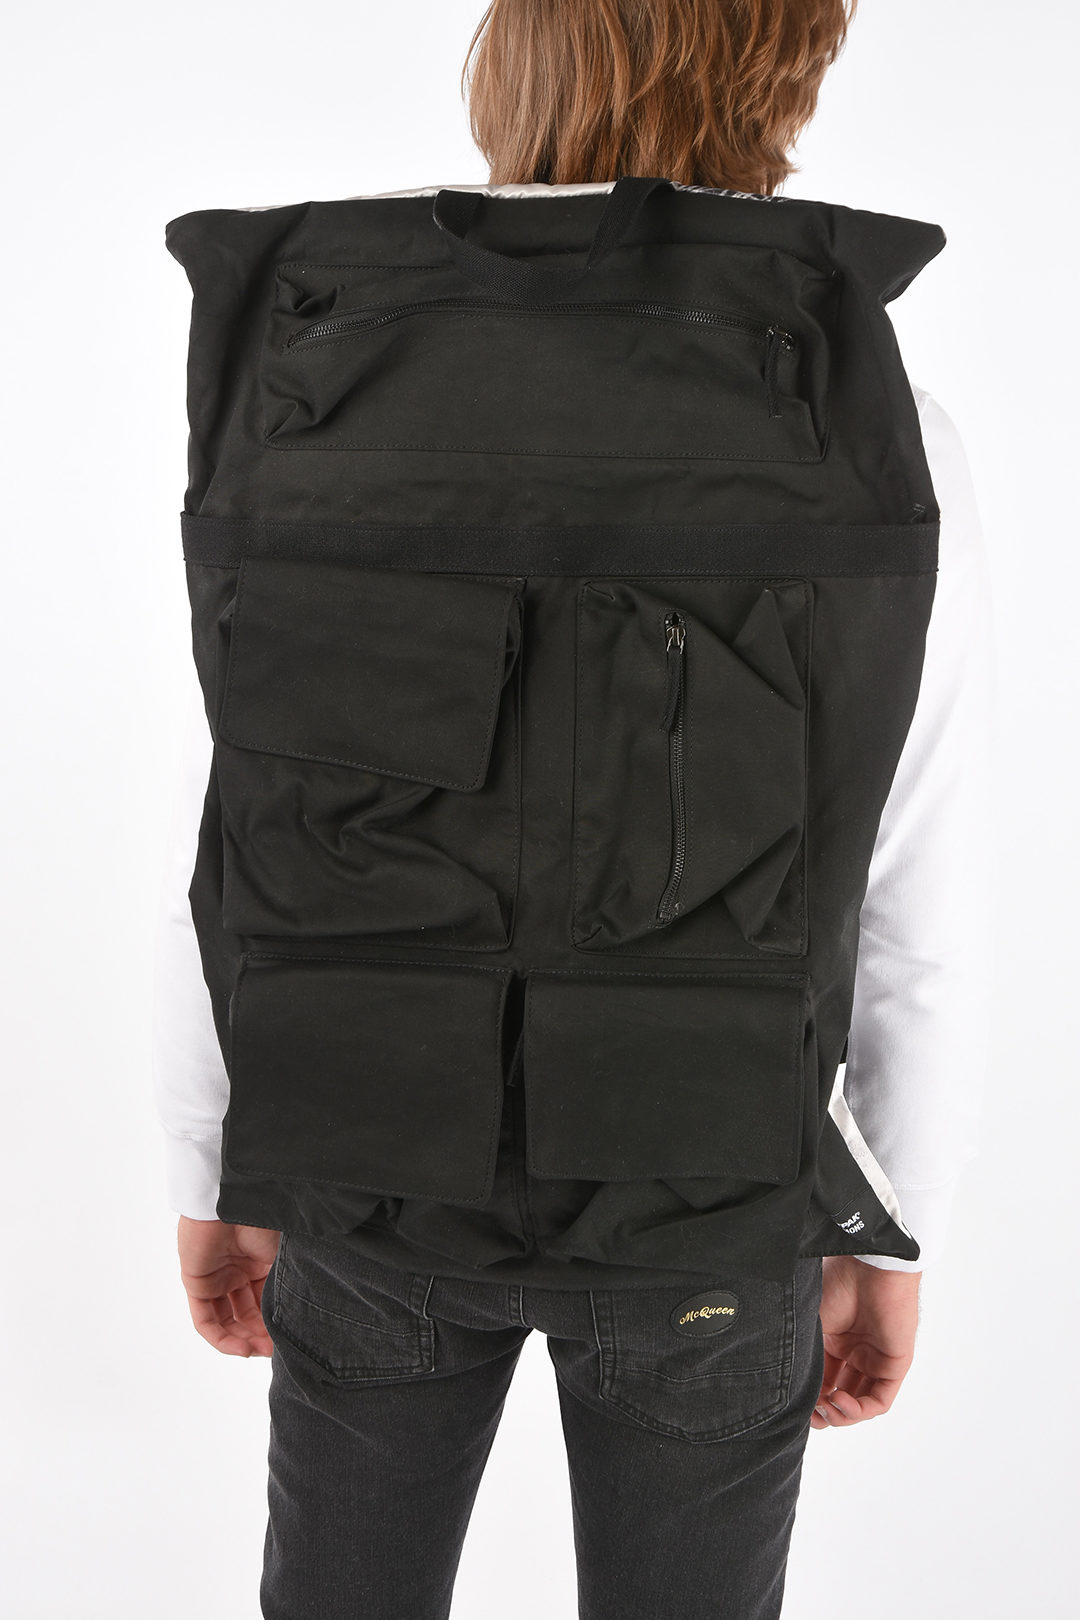 Eastpak RAF SIMONS multi pockets RS POSTER backpack unisex men women -  Glamood Outlet